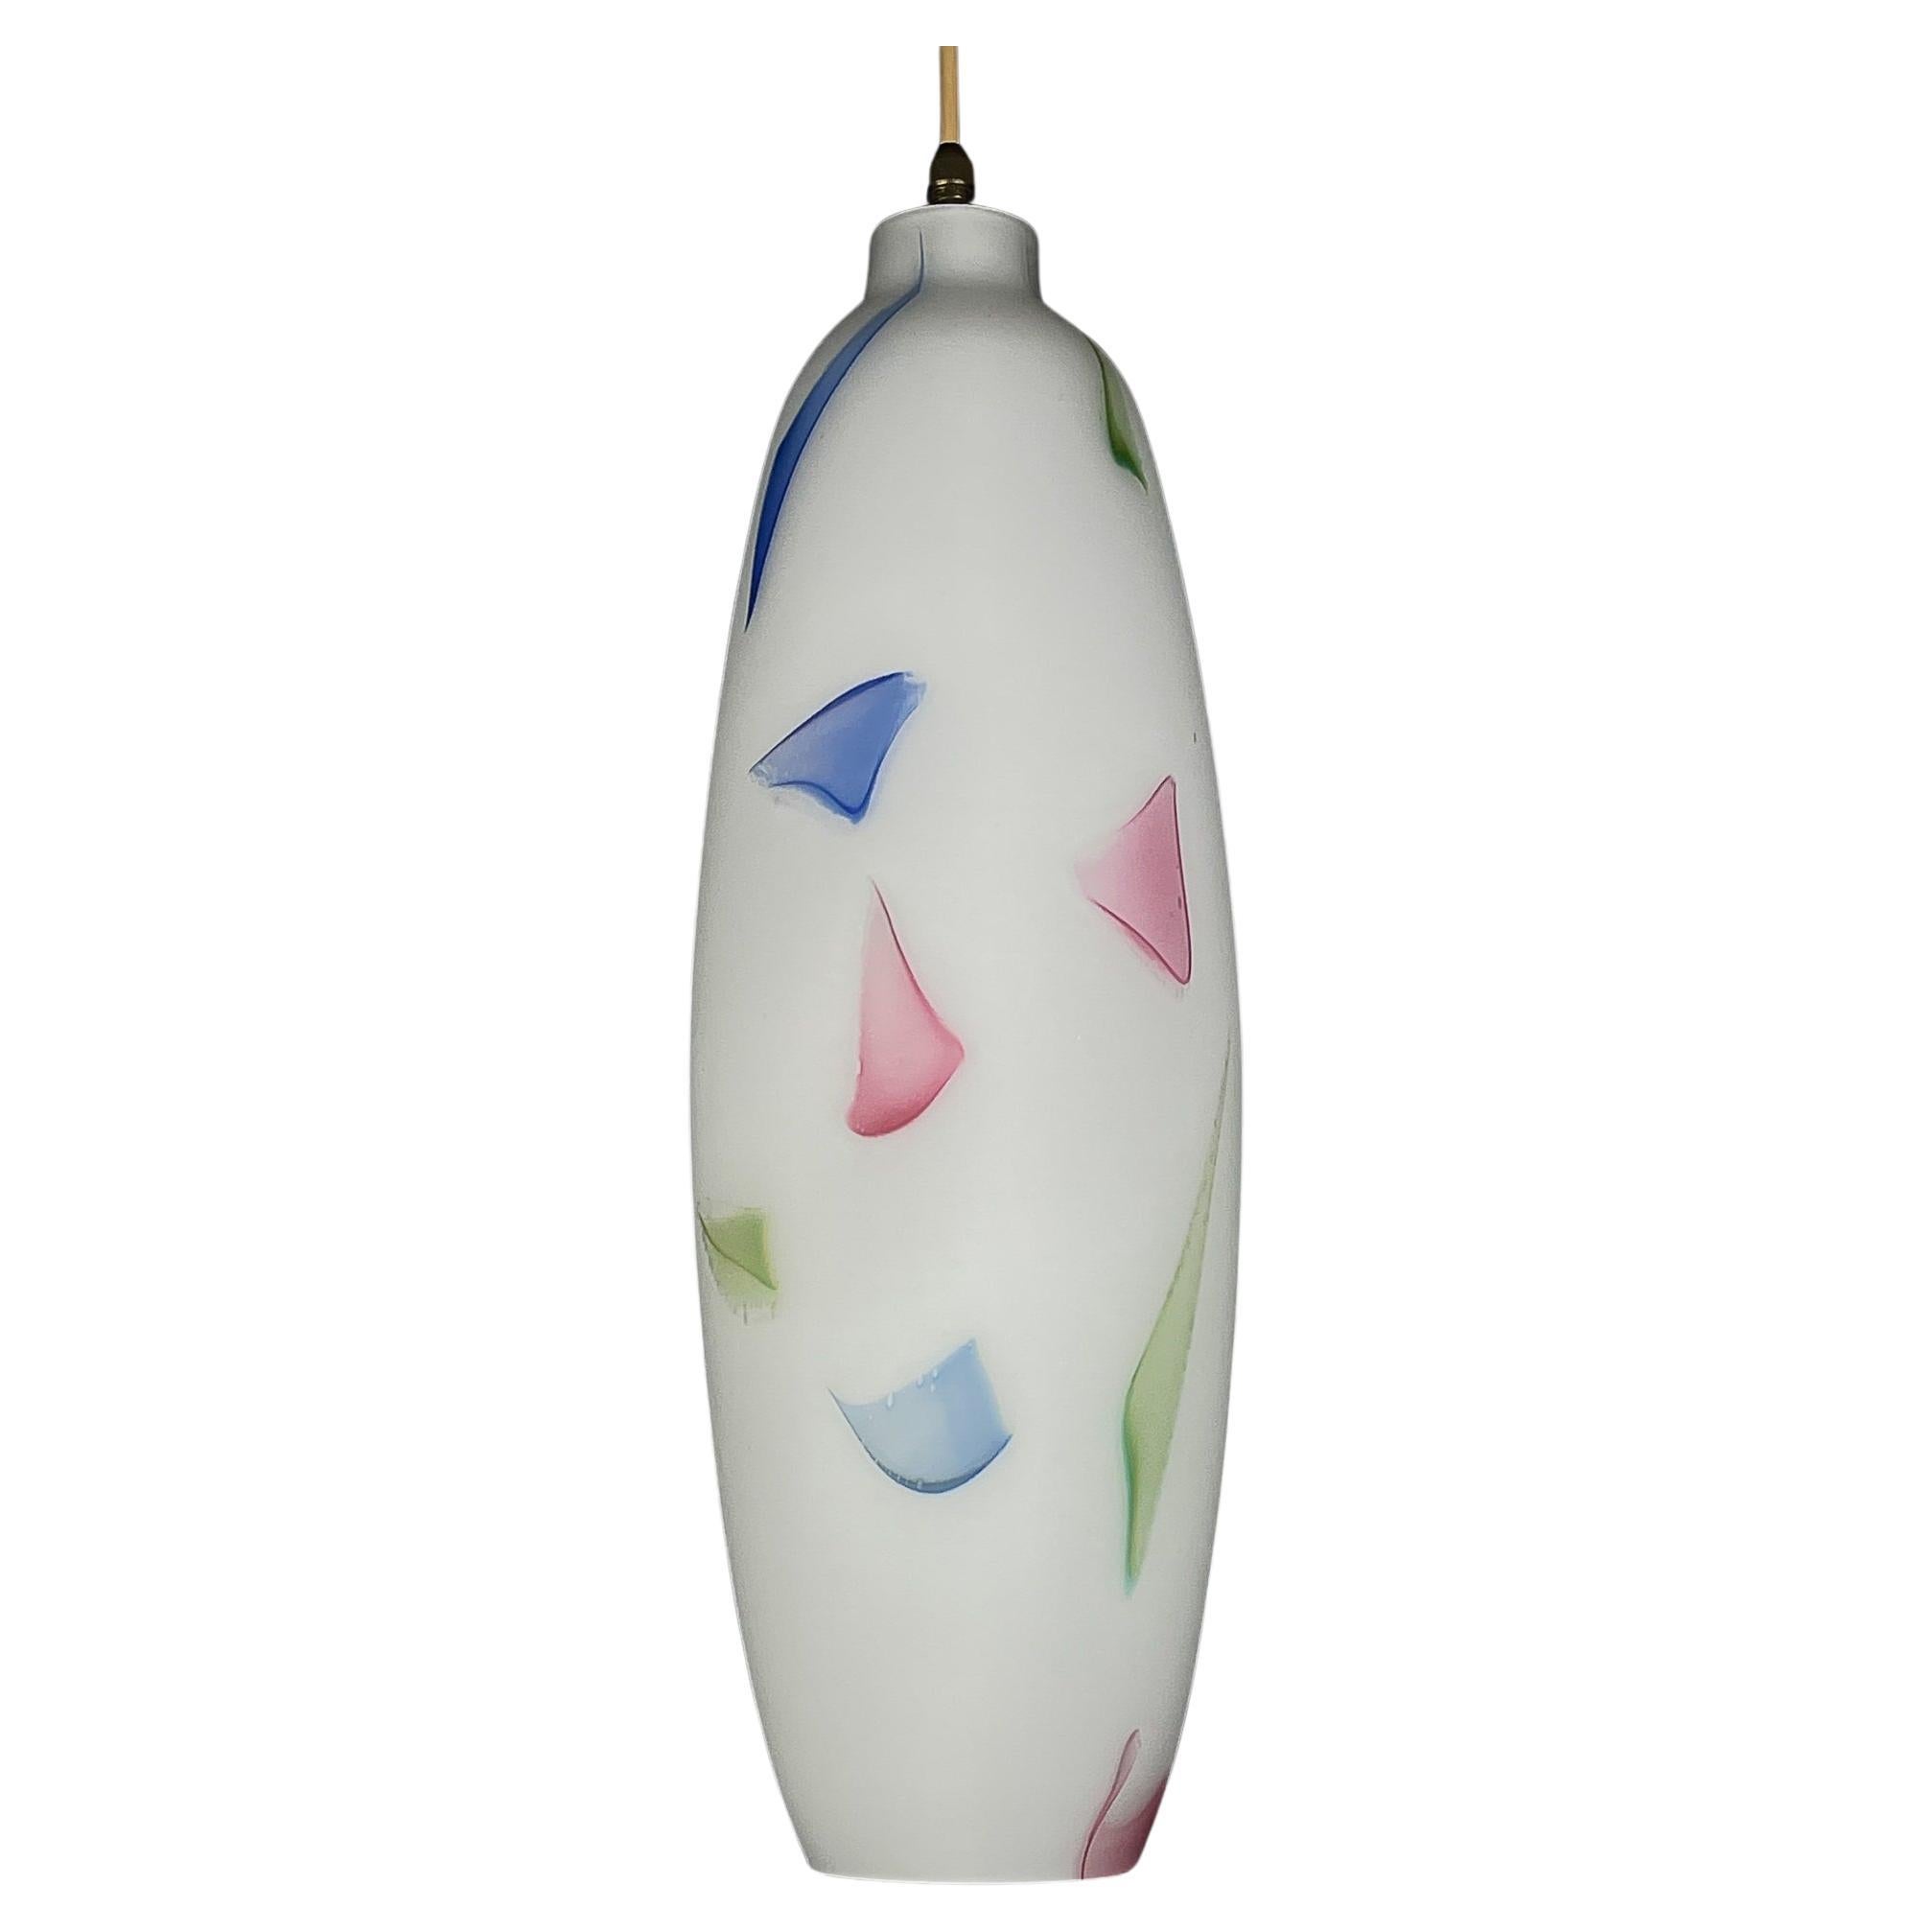 Multicolor opaline murano glass pendant lamp by Stilnovo, Italy 1950s